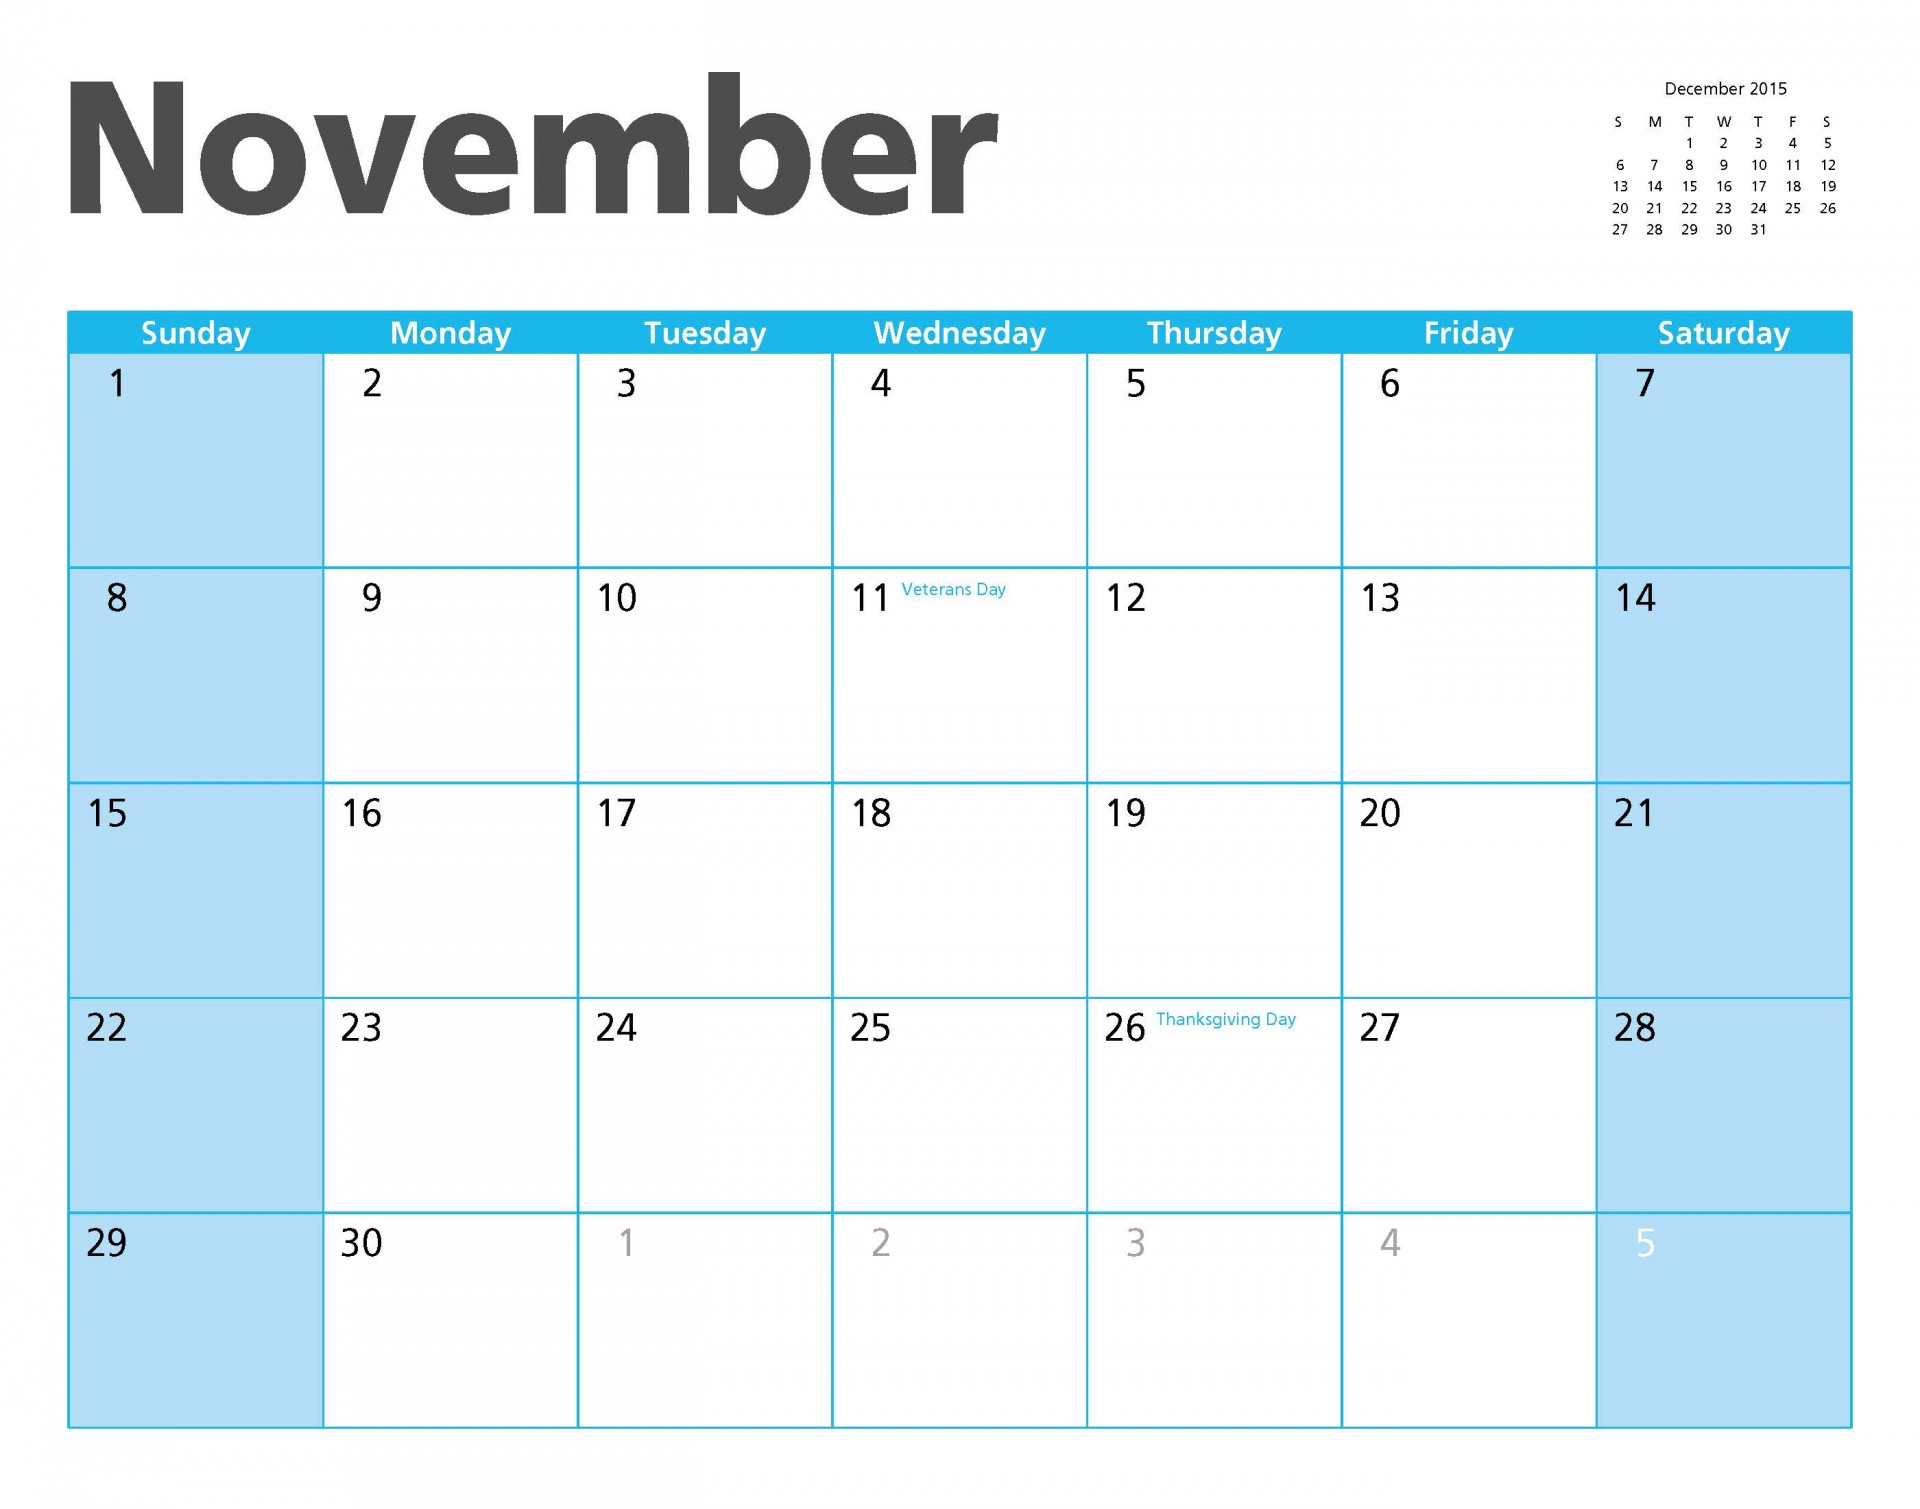 November 2015 Kalender Page